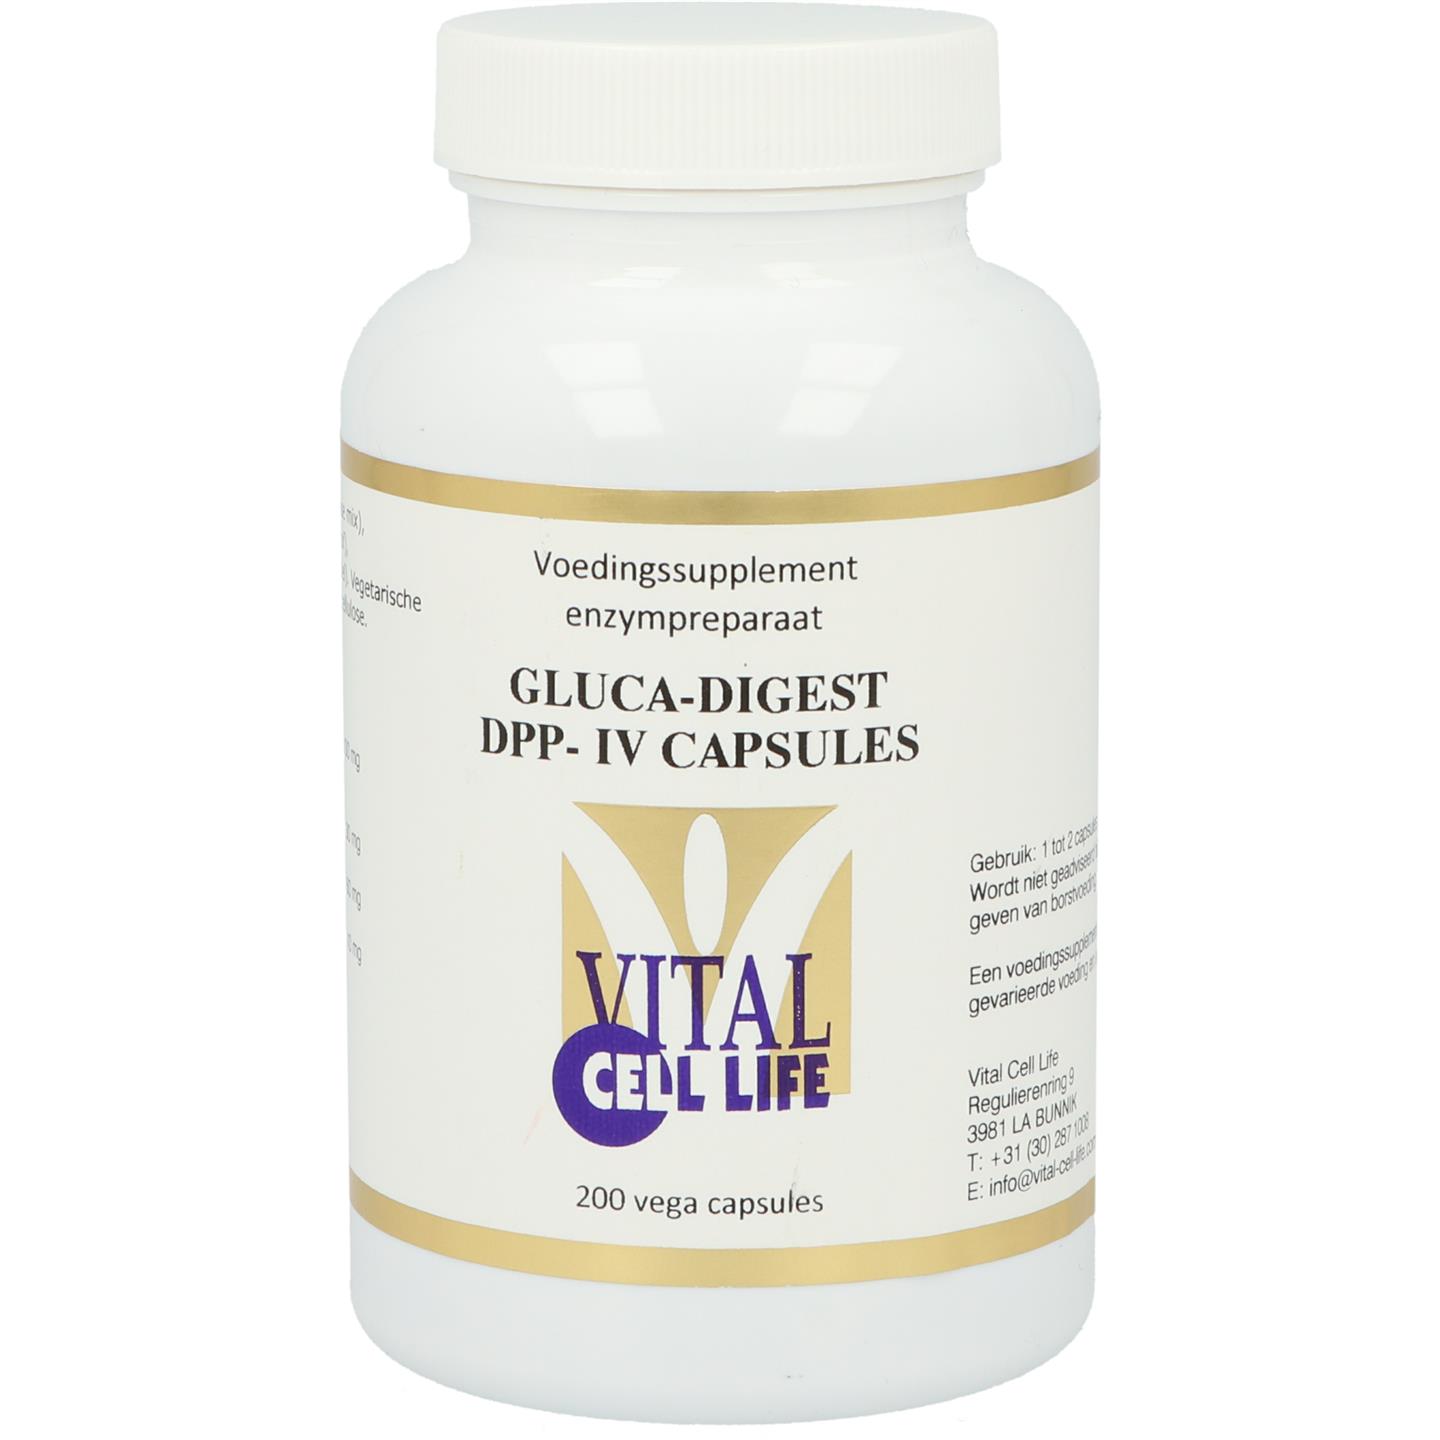 Gluca-Digest DPP- IV